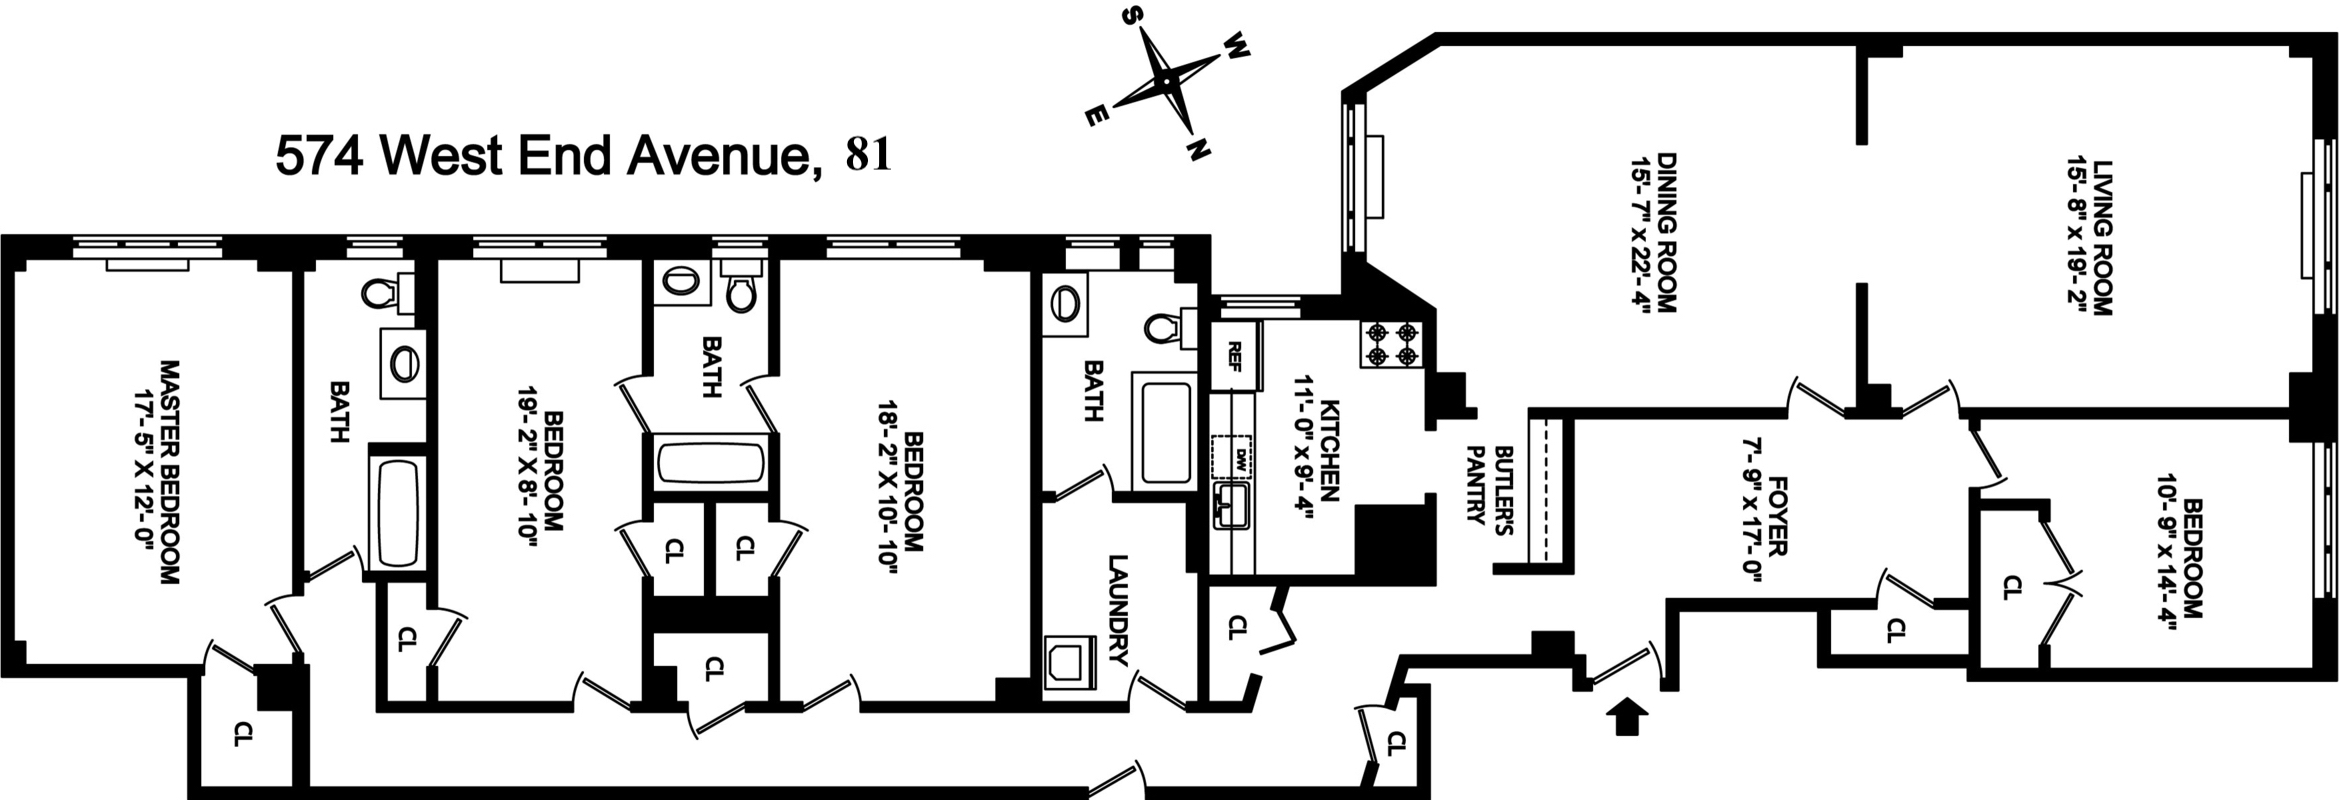 Floorplan for 574 West End Avenue, 81